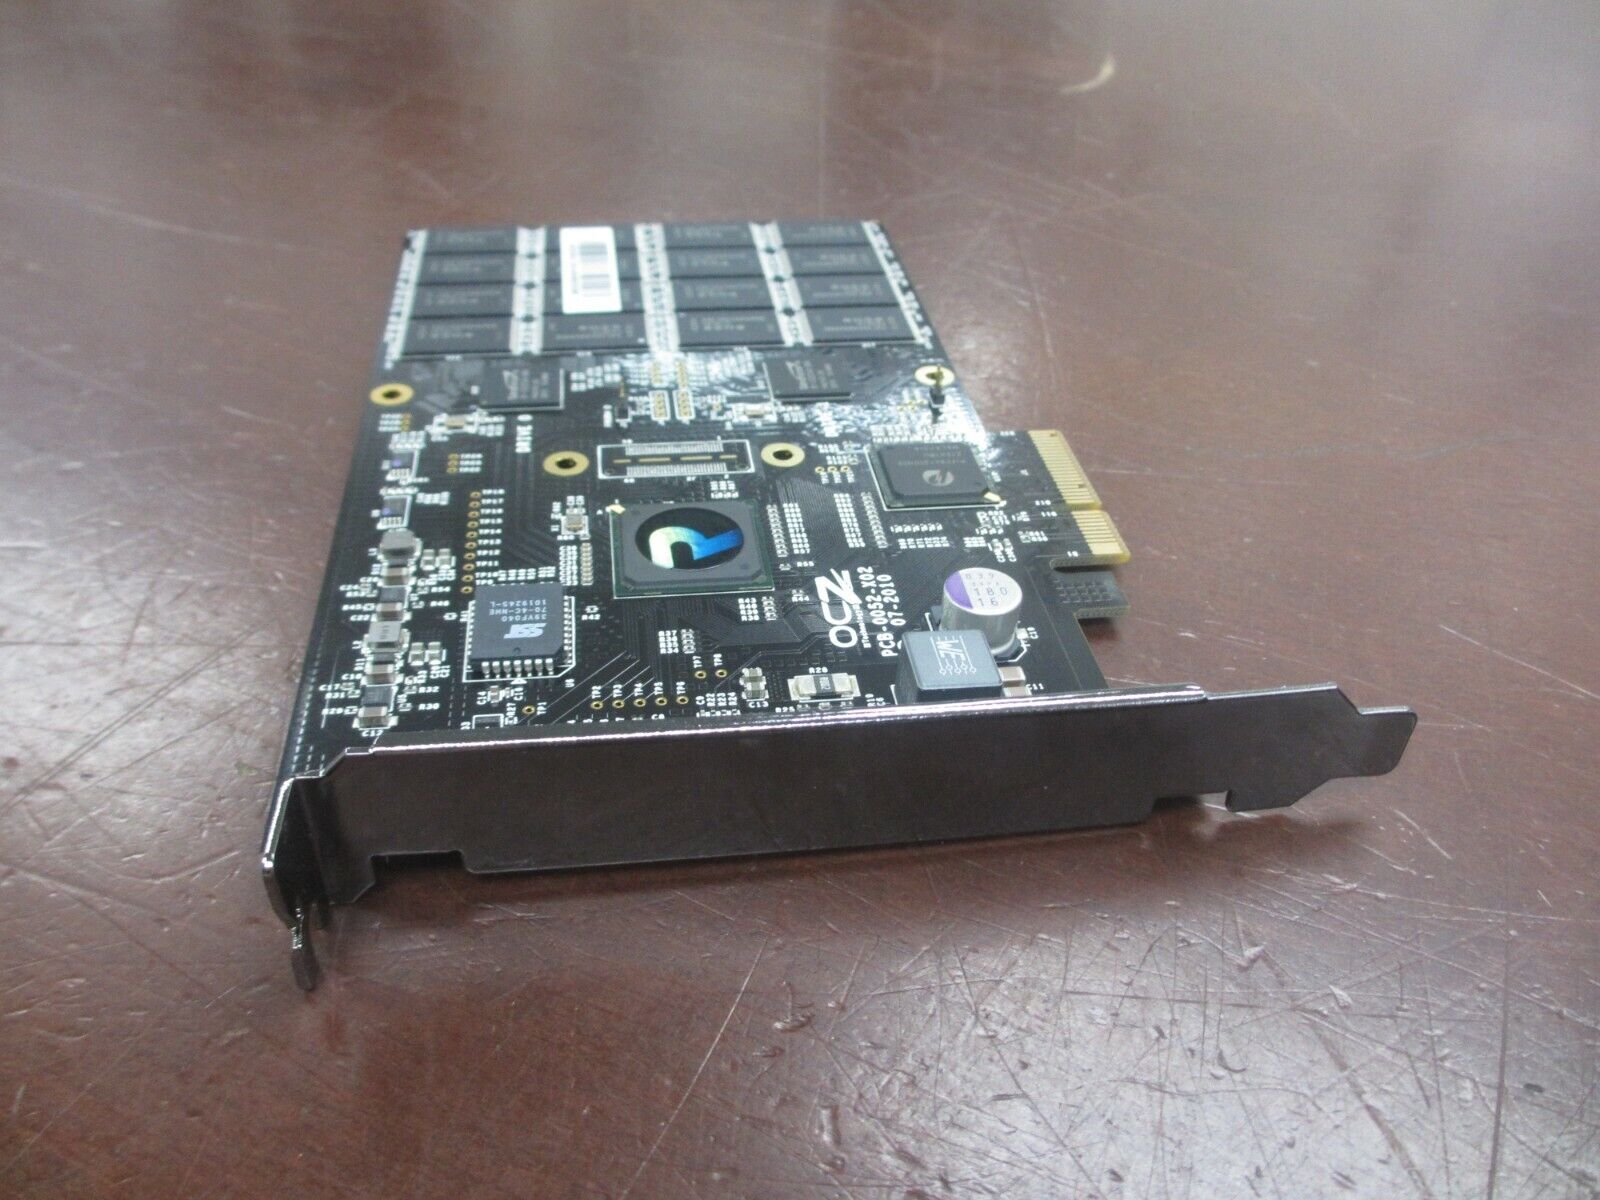 OCZ PCB-0052-X02 OCZSSDPX-1RVD0120 Revo Drive 240GB PCI-E SSD